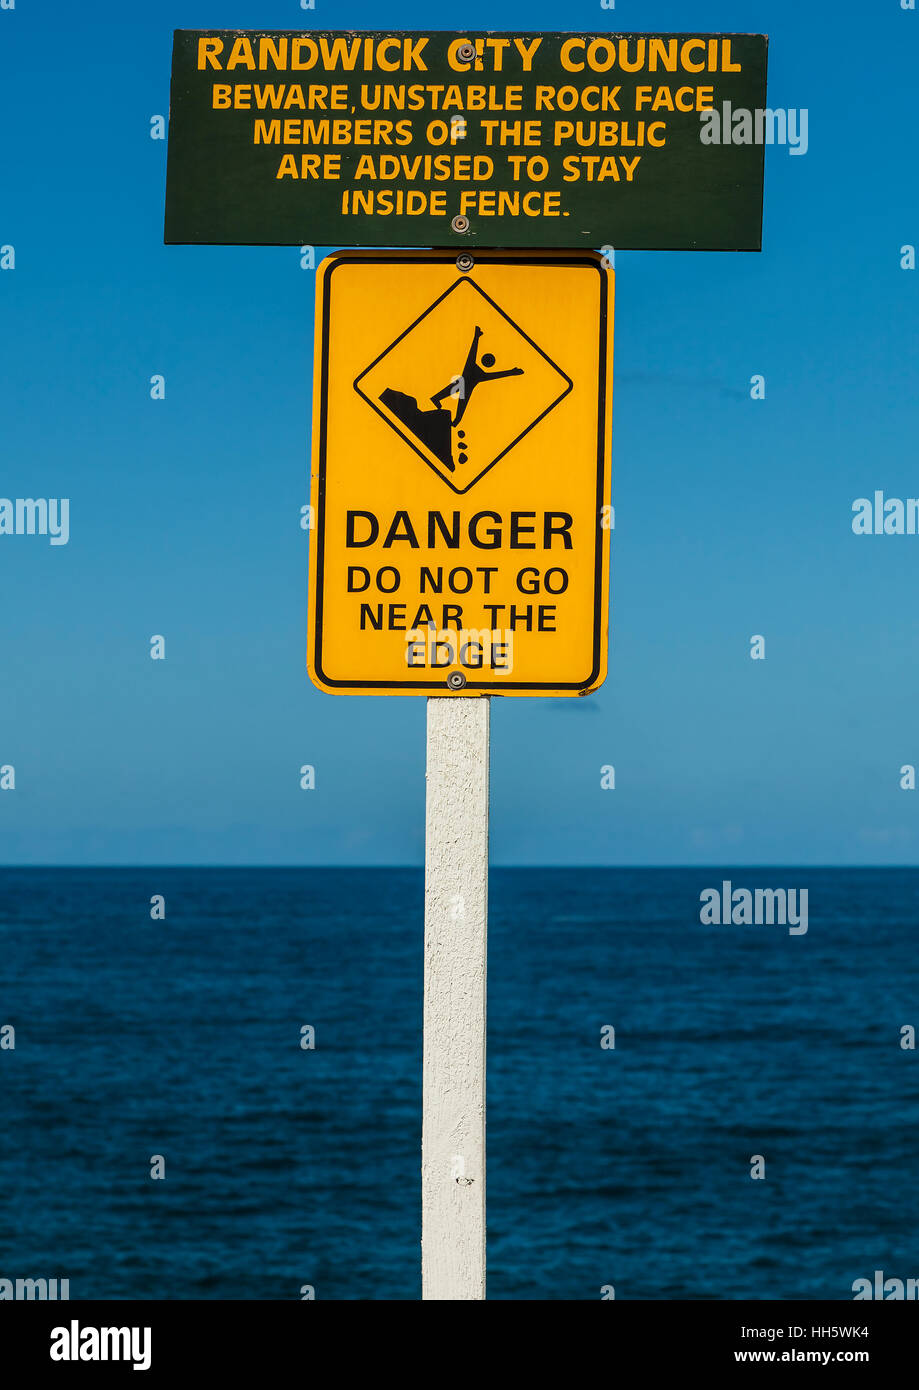 Danger sign - do not go near the edge of the cliff Stock Photo